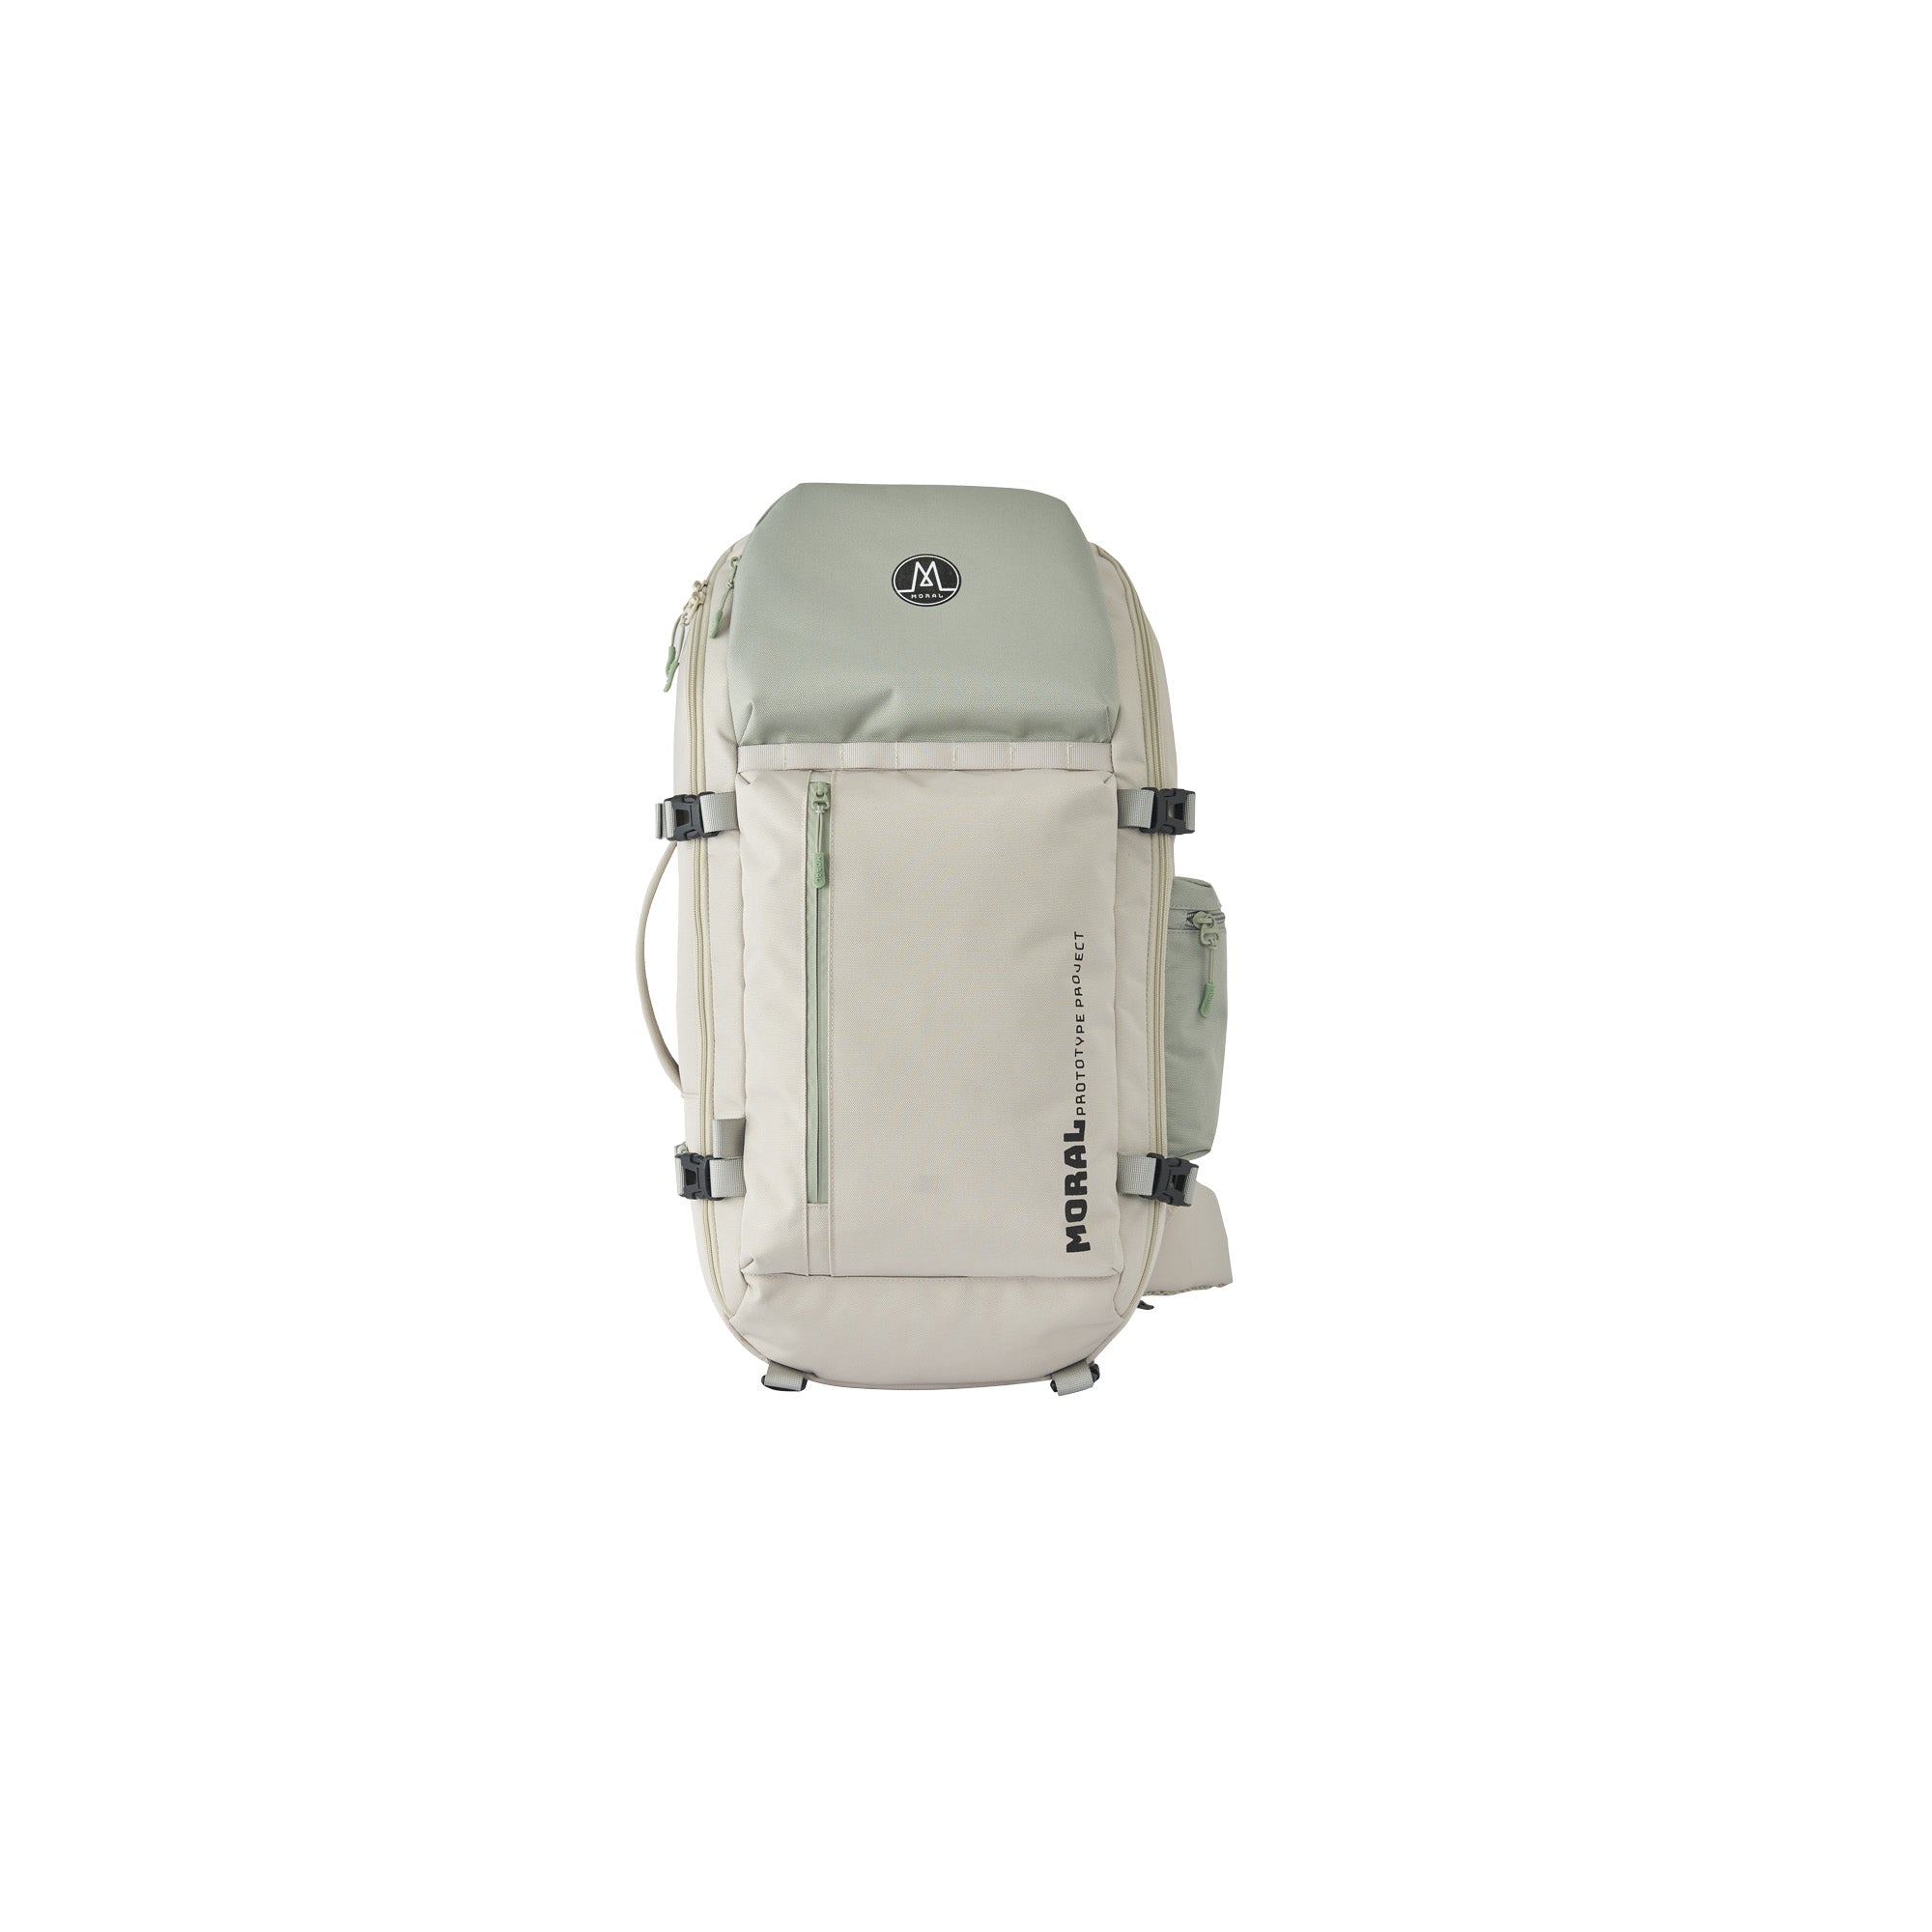 Moral x Kanya 背包實驗企劃 - Cecil Camelini Backpack 55L (限量10個)